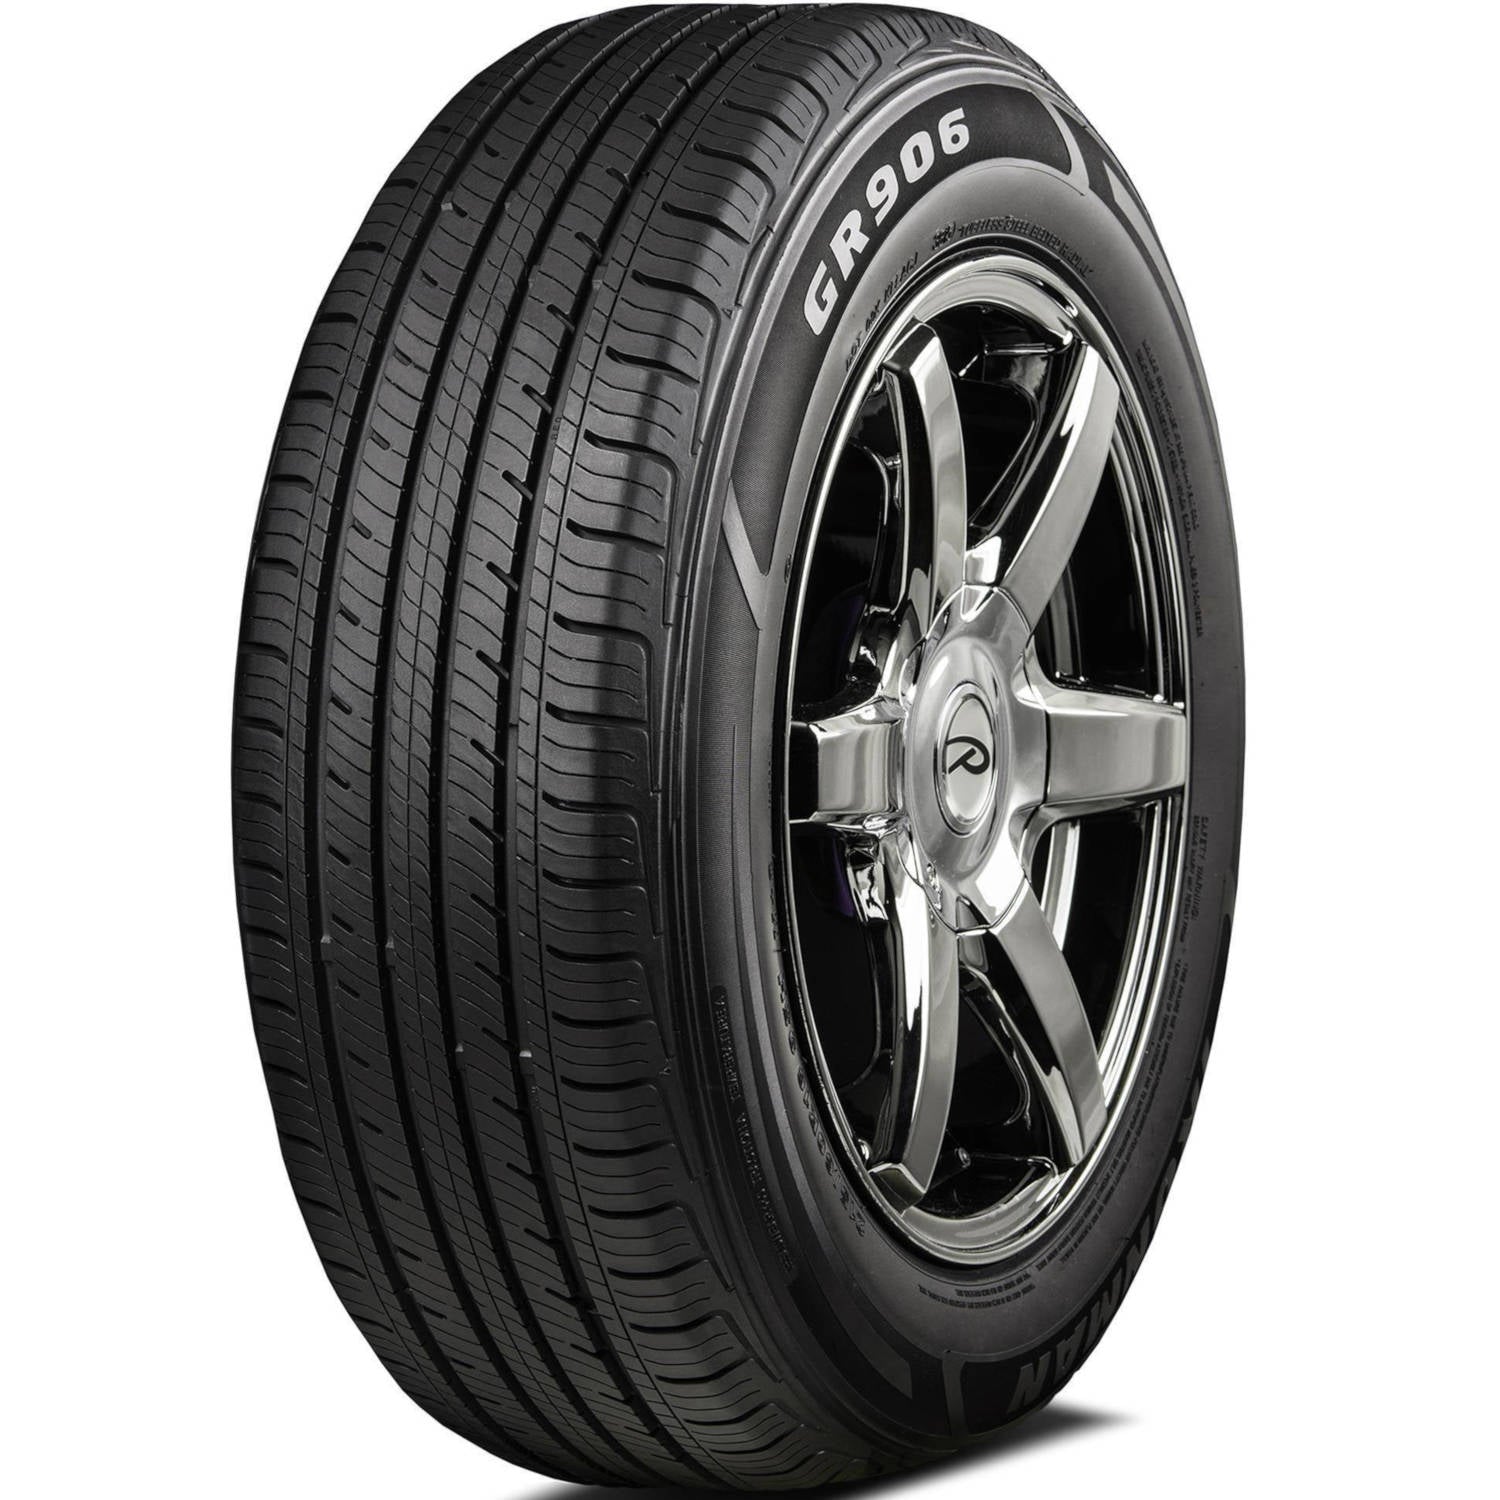 IRONMAN GR906 205/60R15 (24.7X8.1R 15) Tires